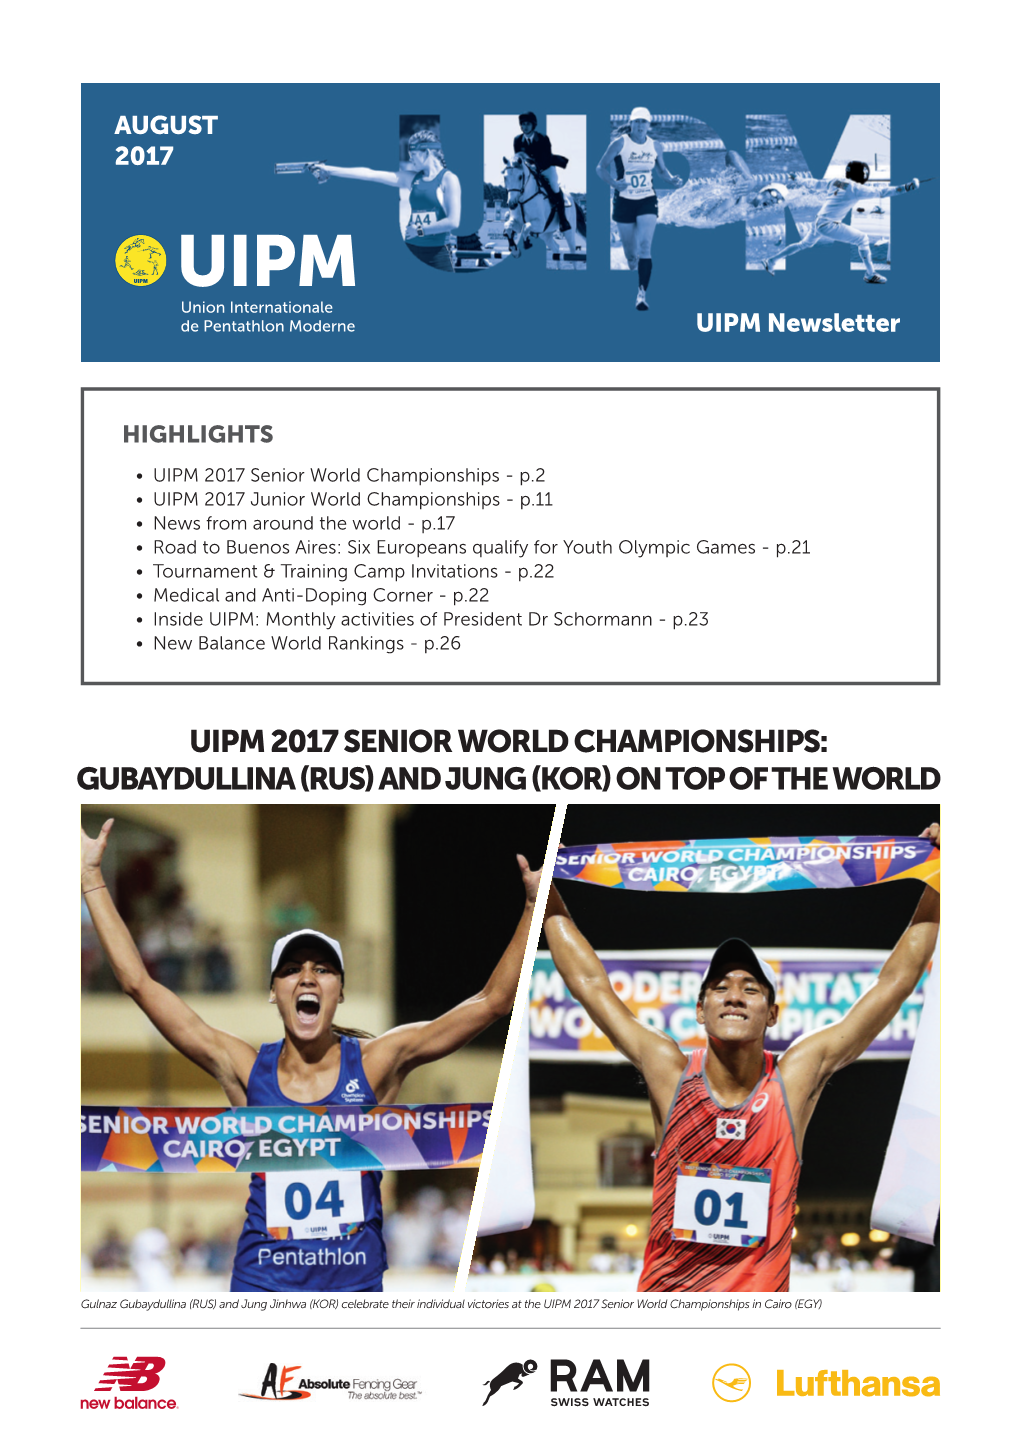 Uipm 2017 Senior World Championships: Gubaydullina (Rus) and Jung (Kor) on Top of the World